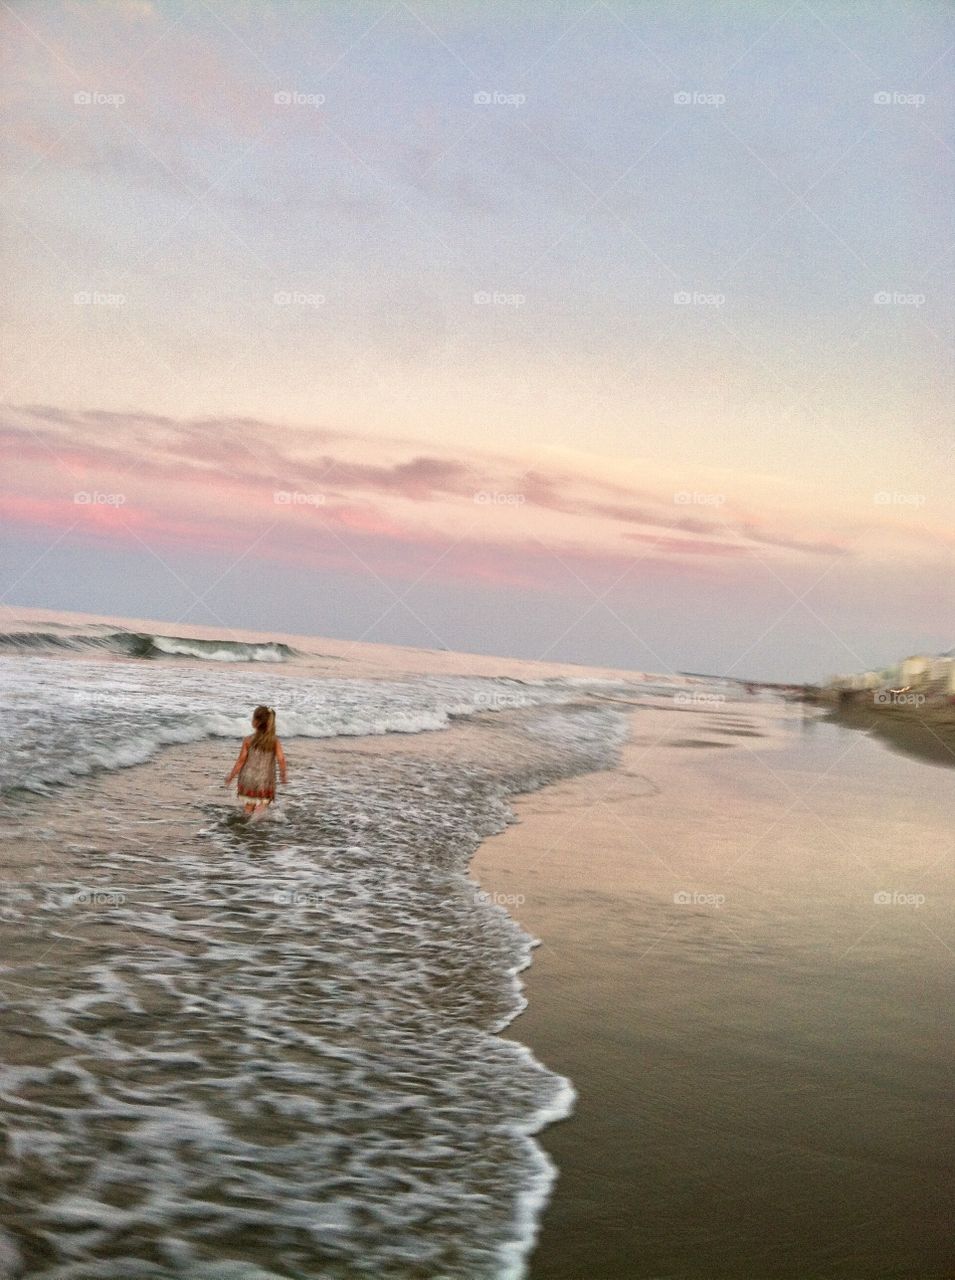 Child Walking on Beach at Sunset